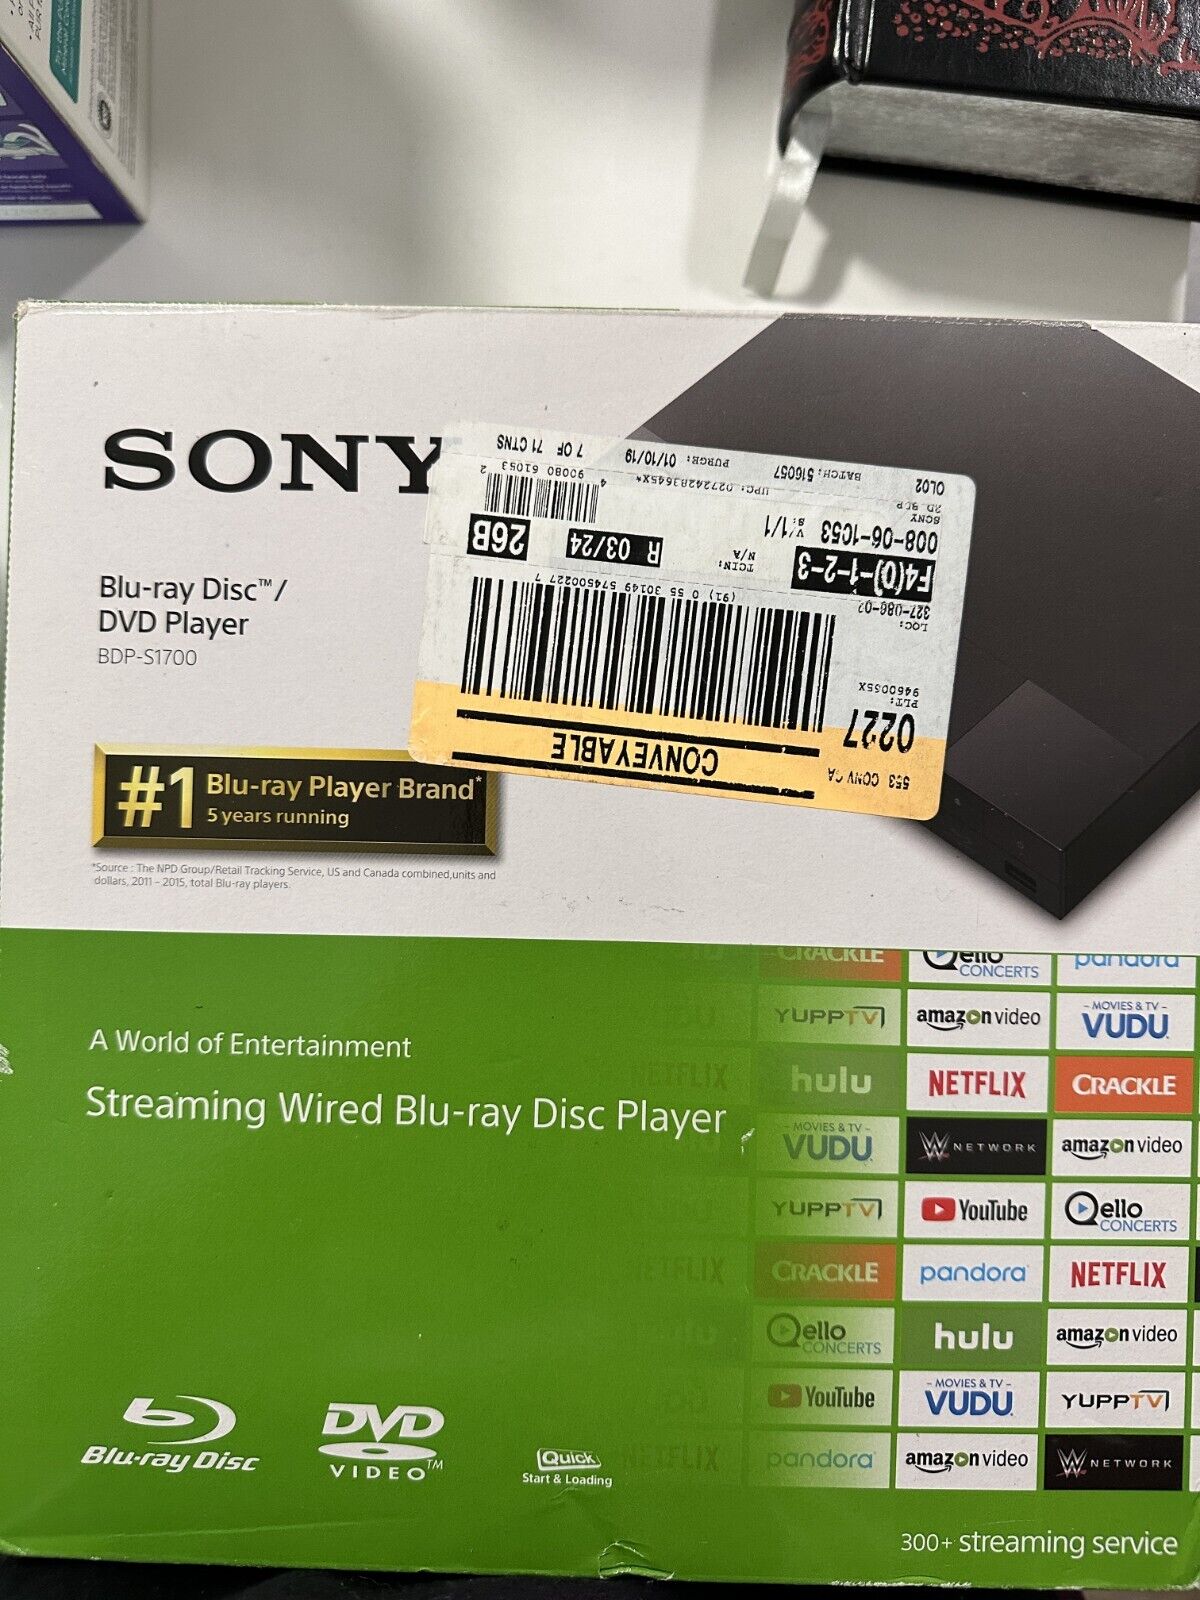 Sony BDP-S1700 Blu-ray DVD Player Wired LAN Ethernet Black BRAND NEW